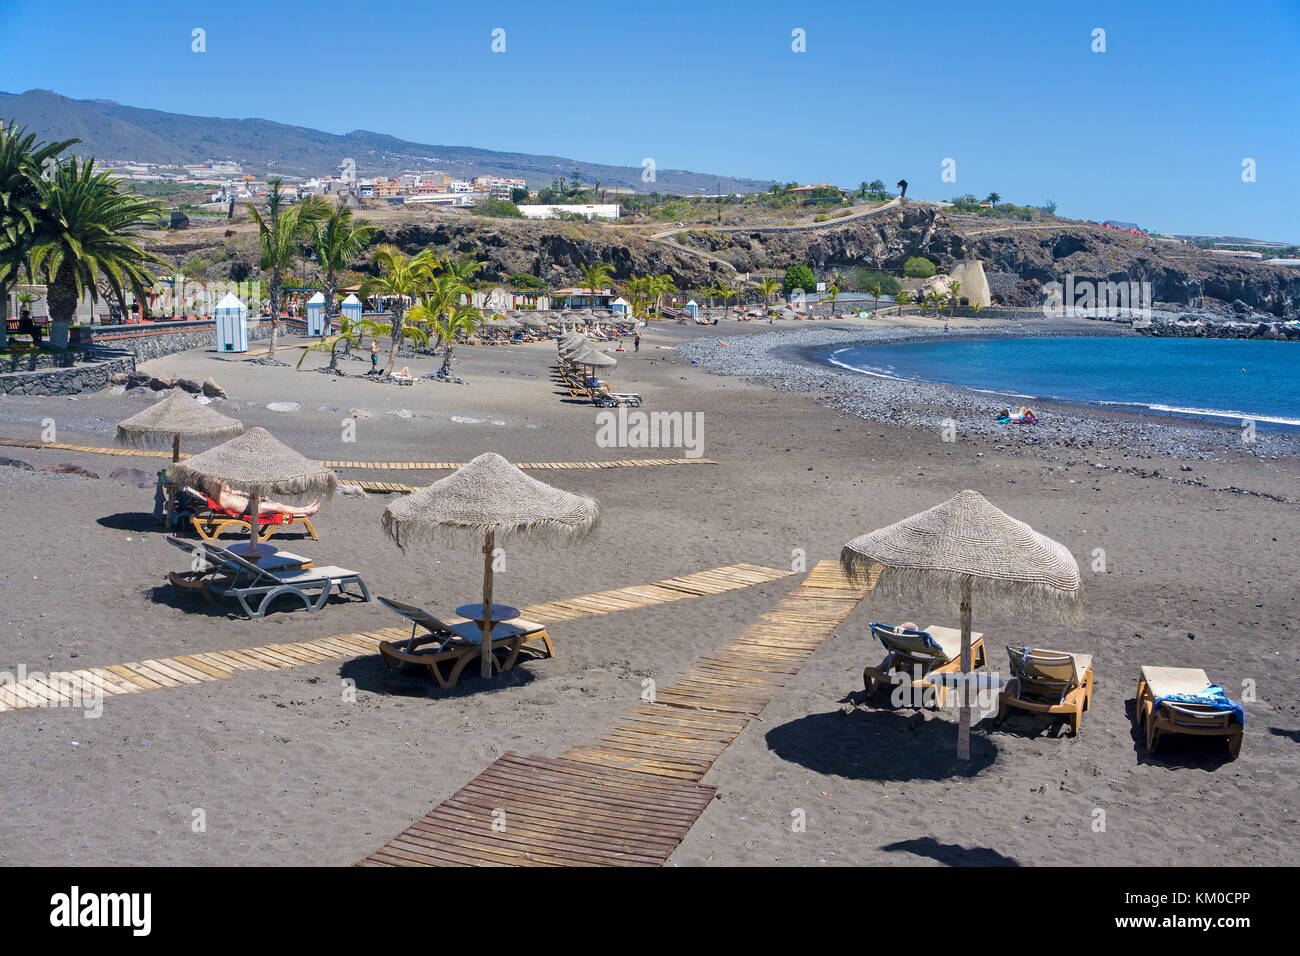 Playa San Juan, Playa en la costa oeste de la isla, la isla de Tenerife, Islas Canarias, España Foto de stock